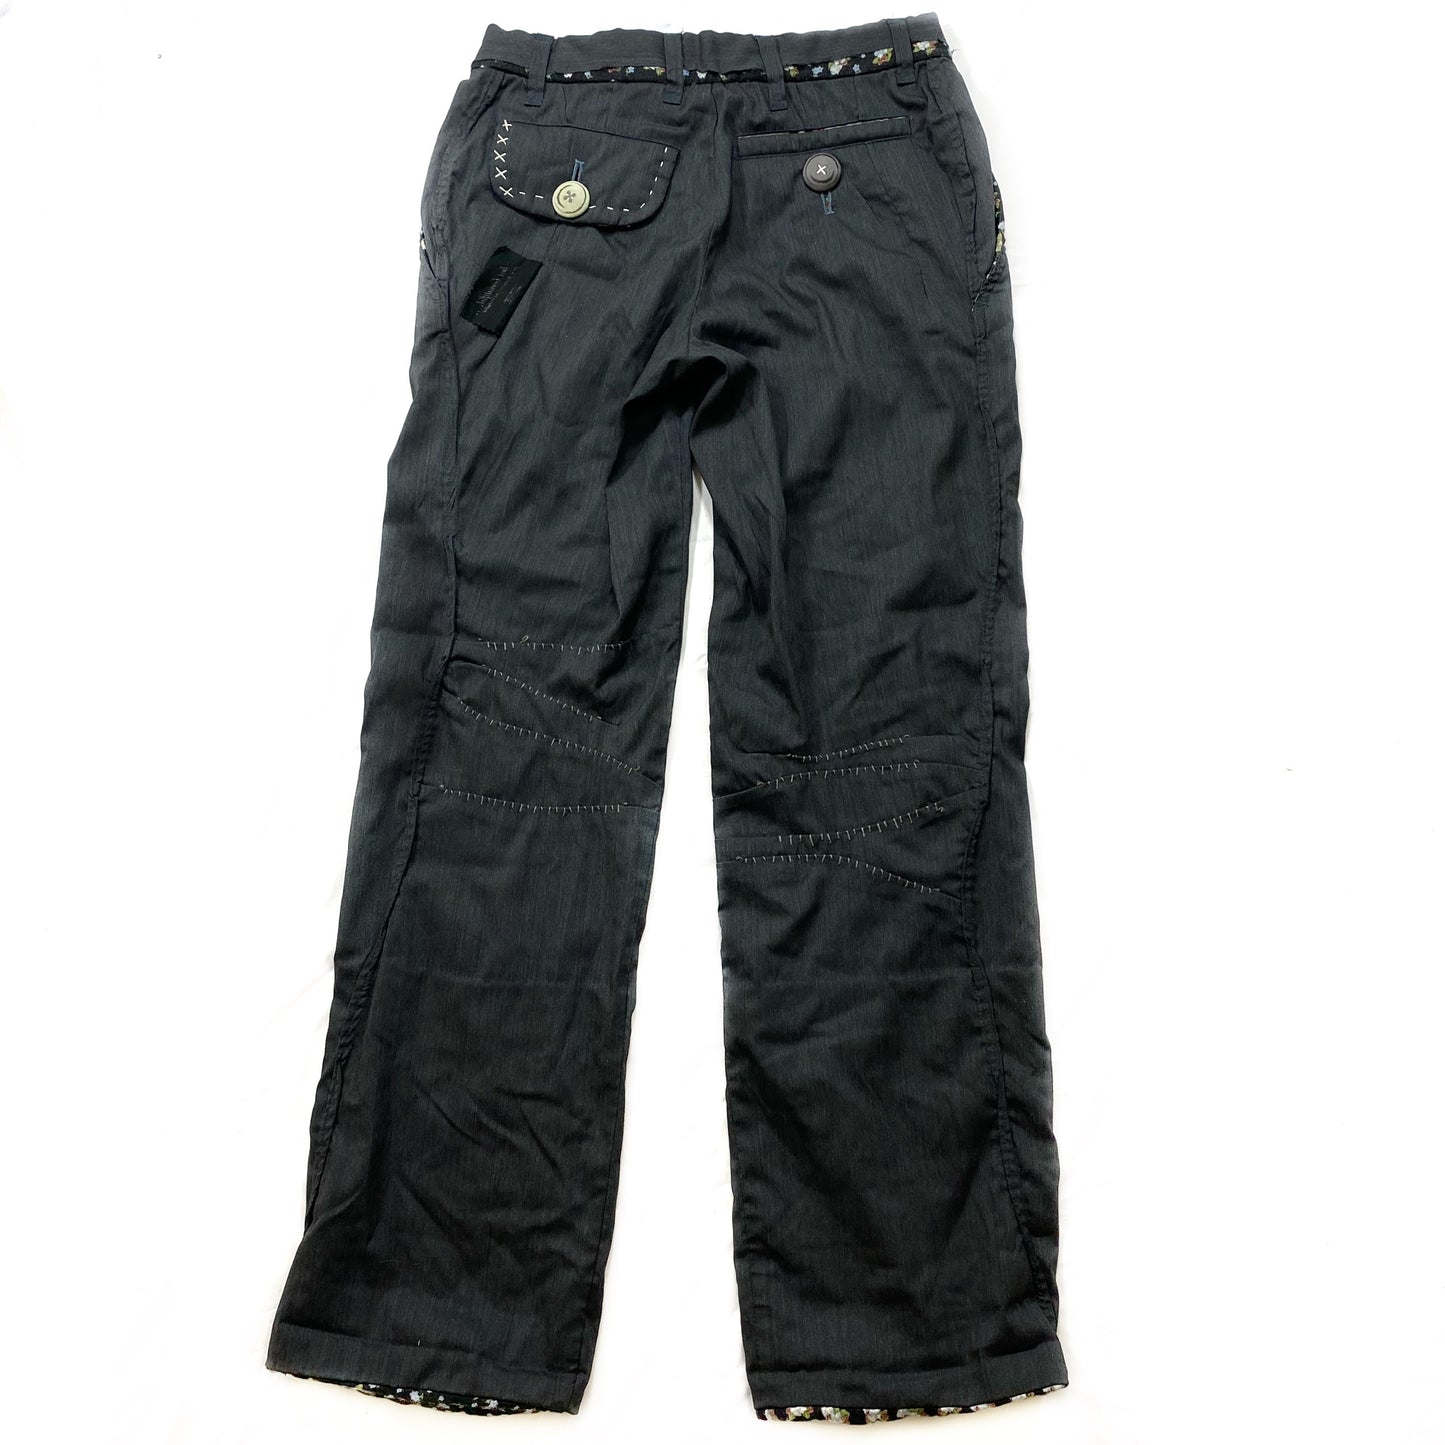 Undercover rebuild trousers A/W04 “But Beautiful” 26